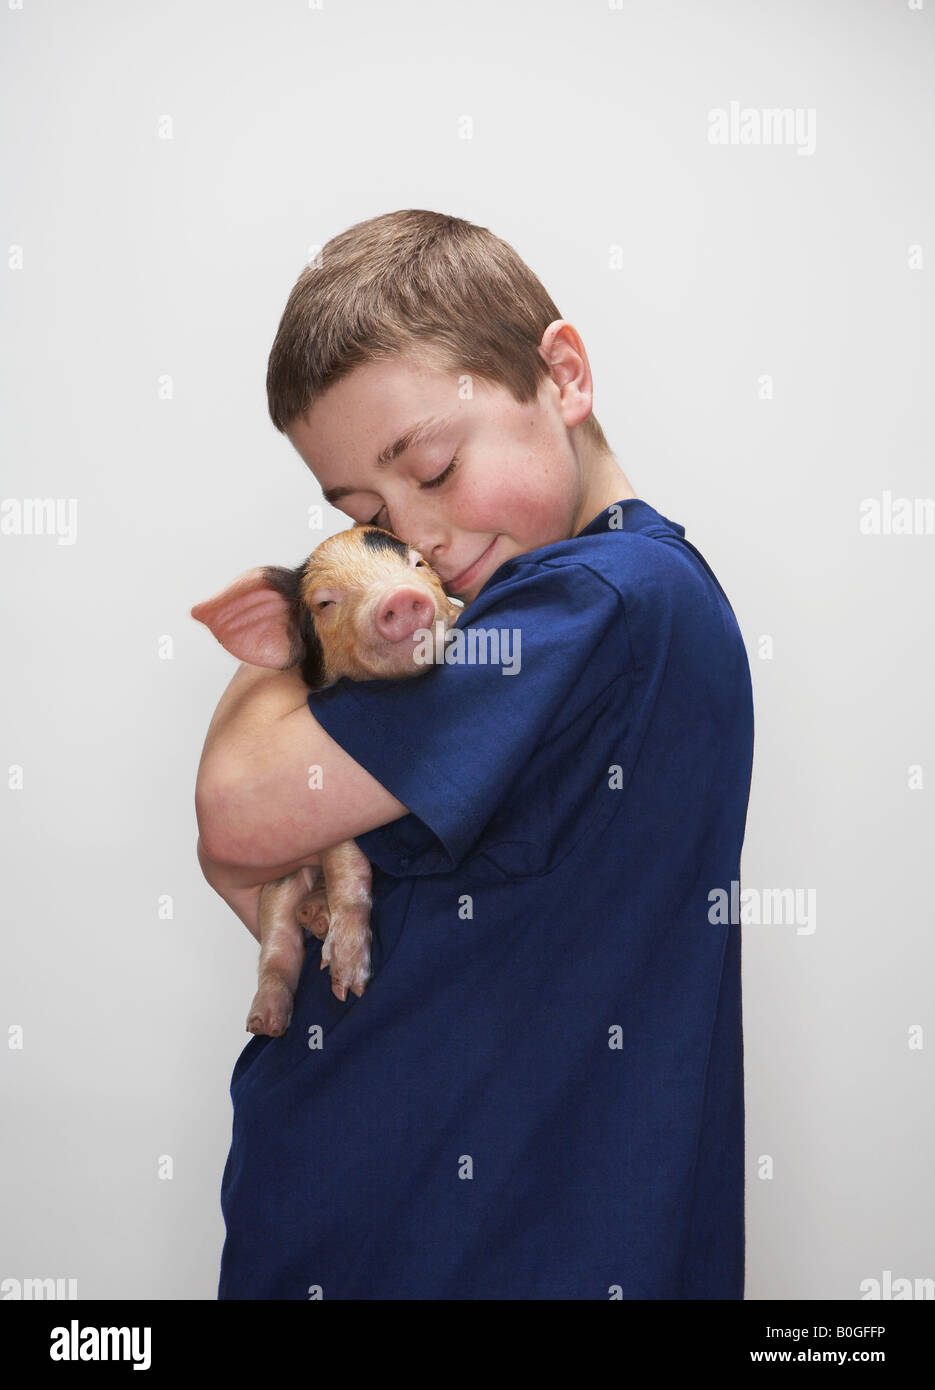 Boy hugging piglet Stock Photo